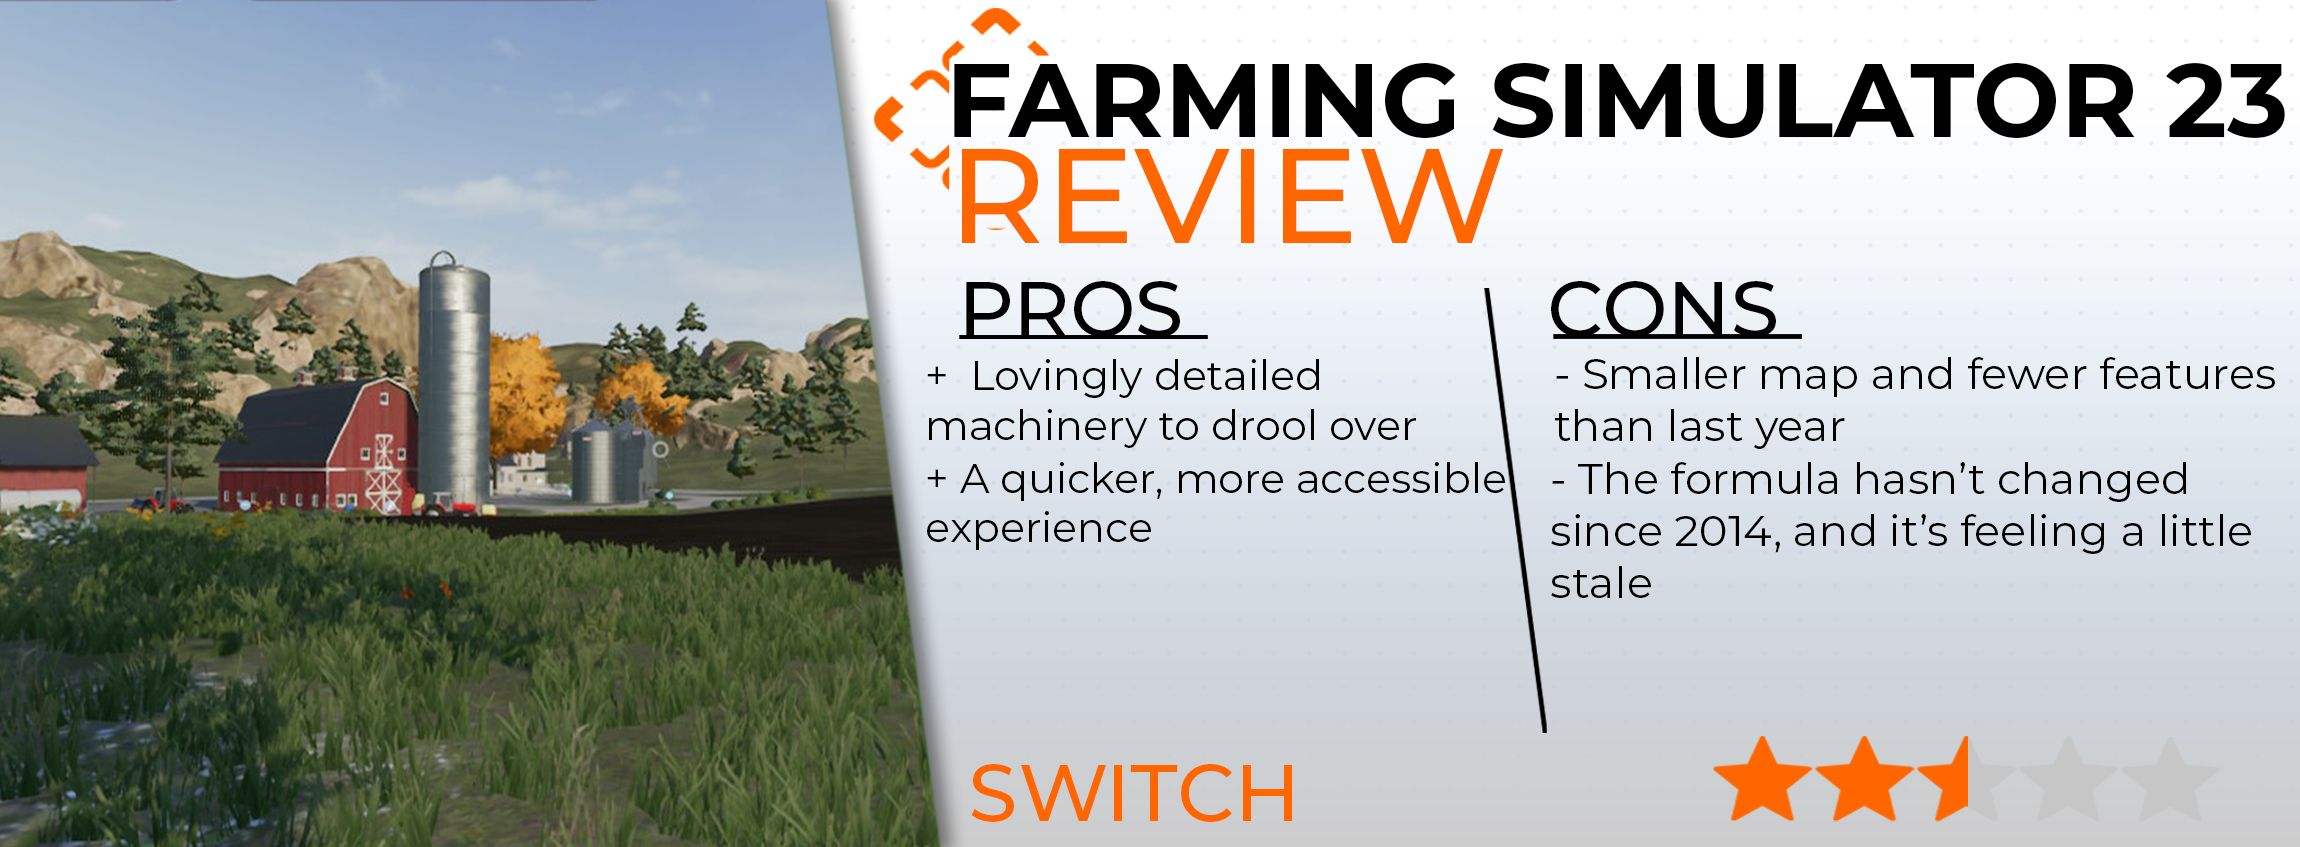 Review - Farming Simulator 23 - WayTooManyGames